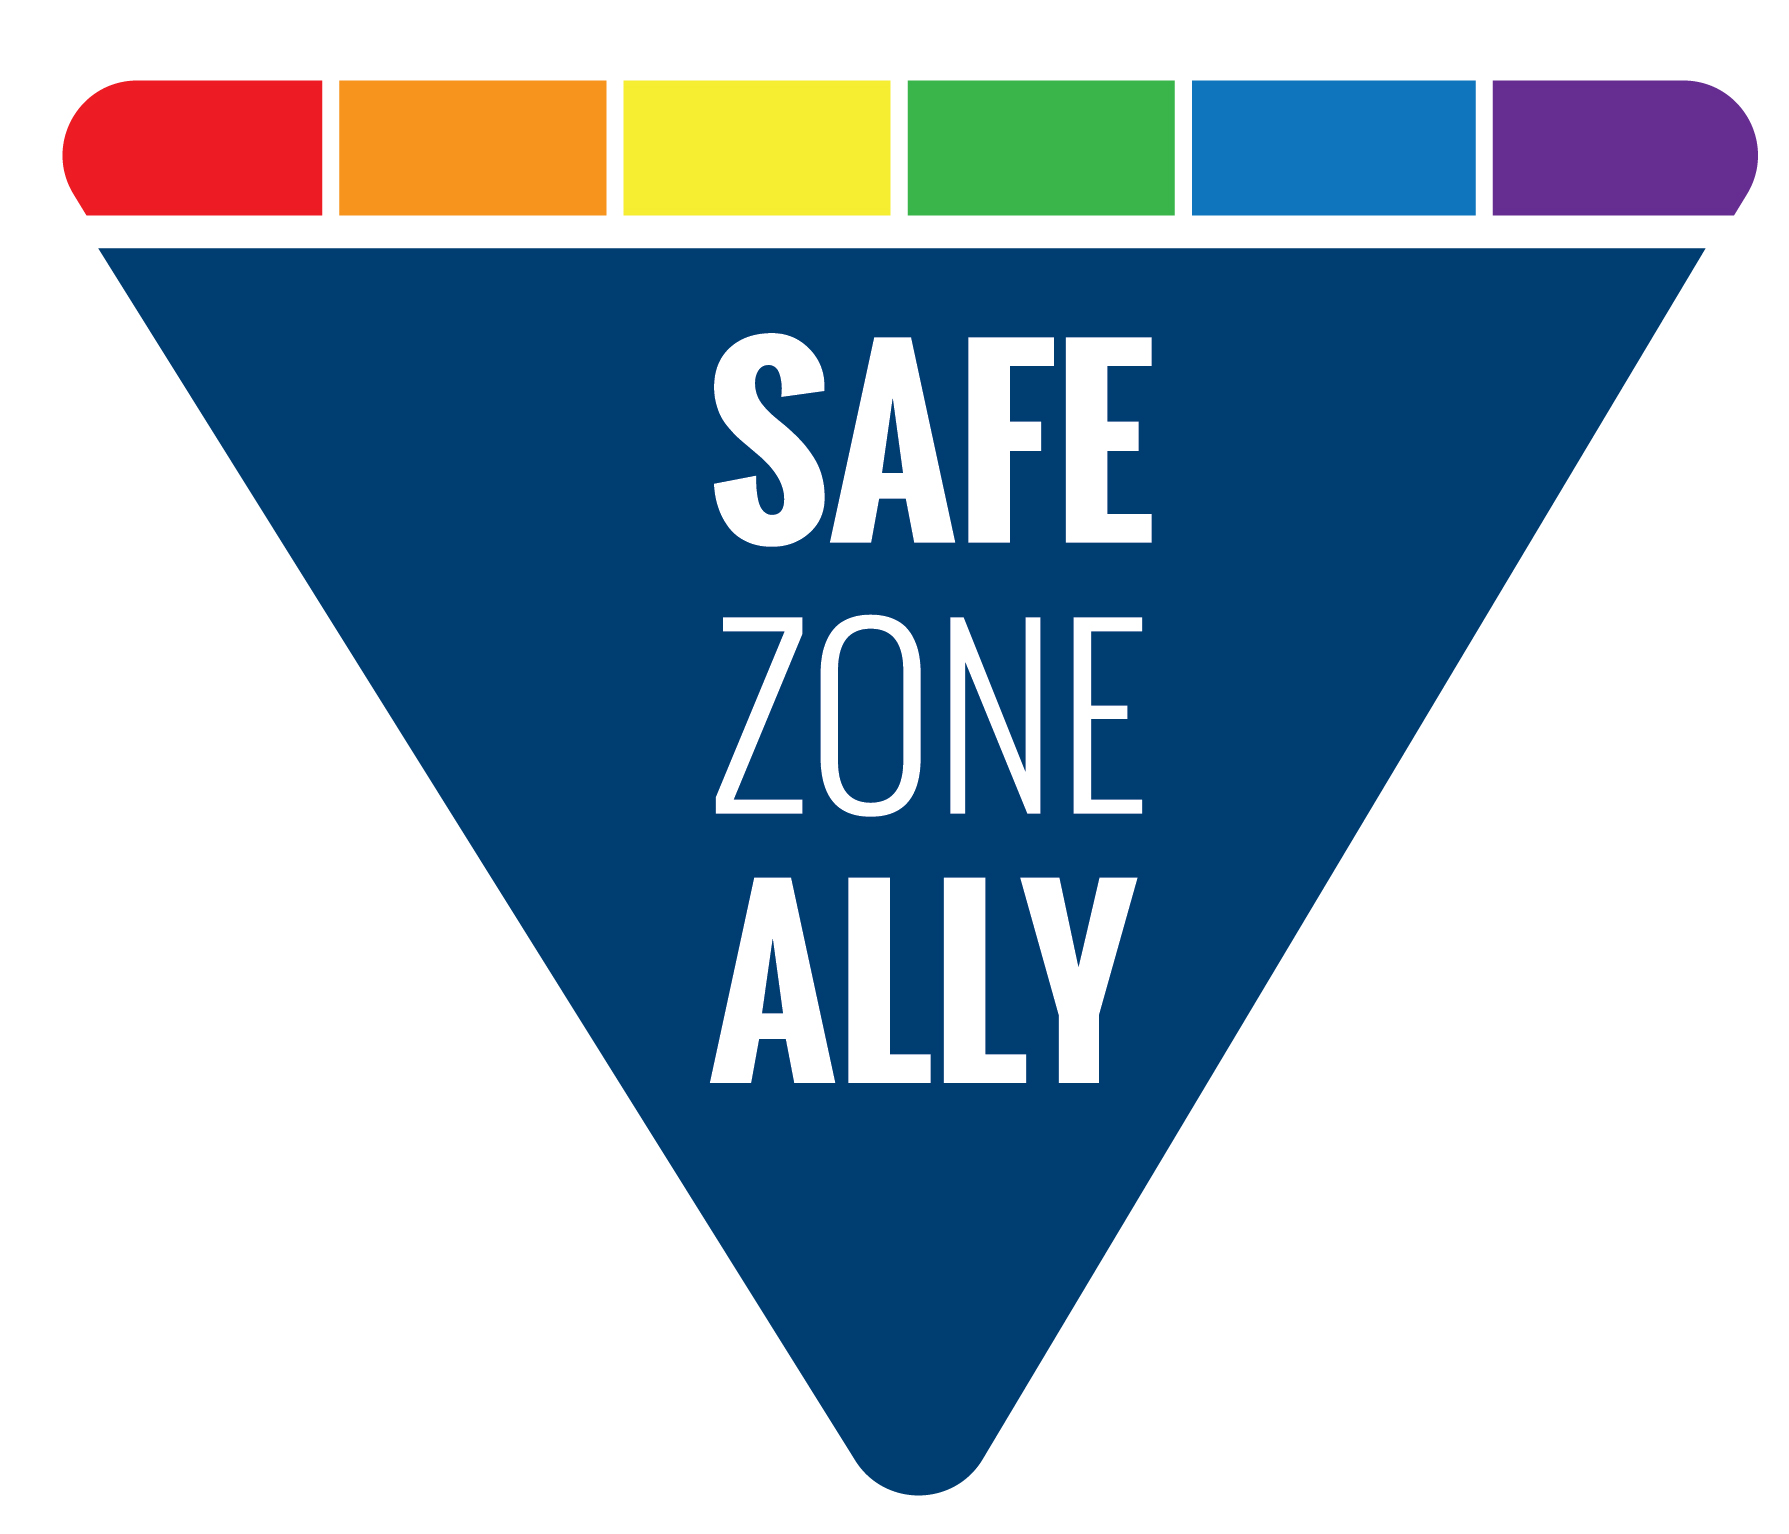 safe zone ally icon